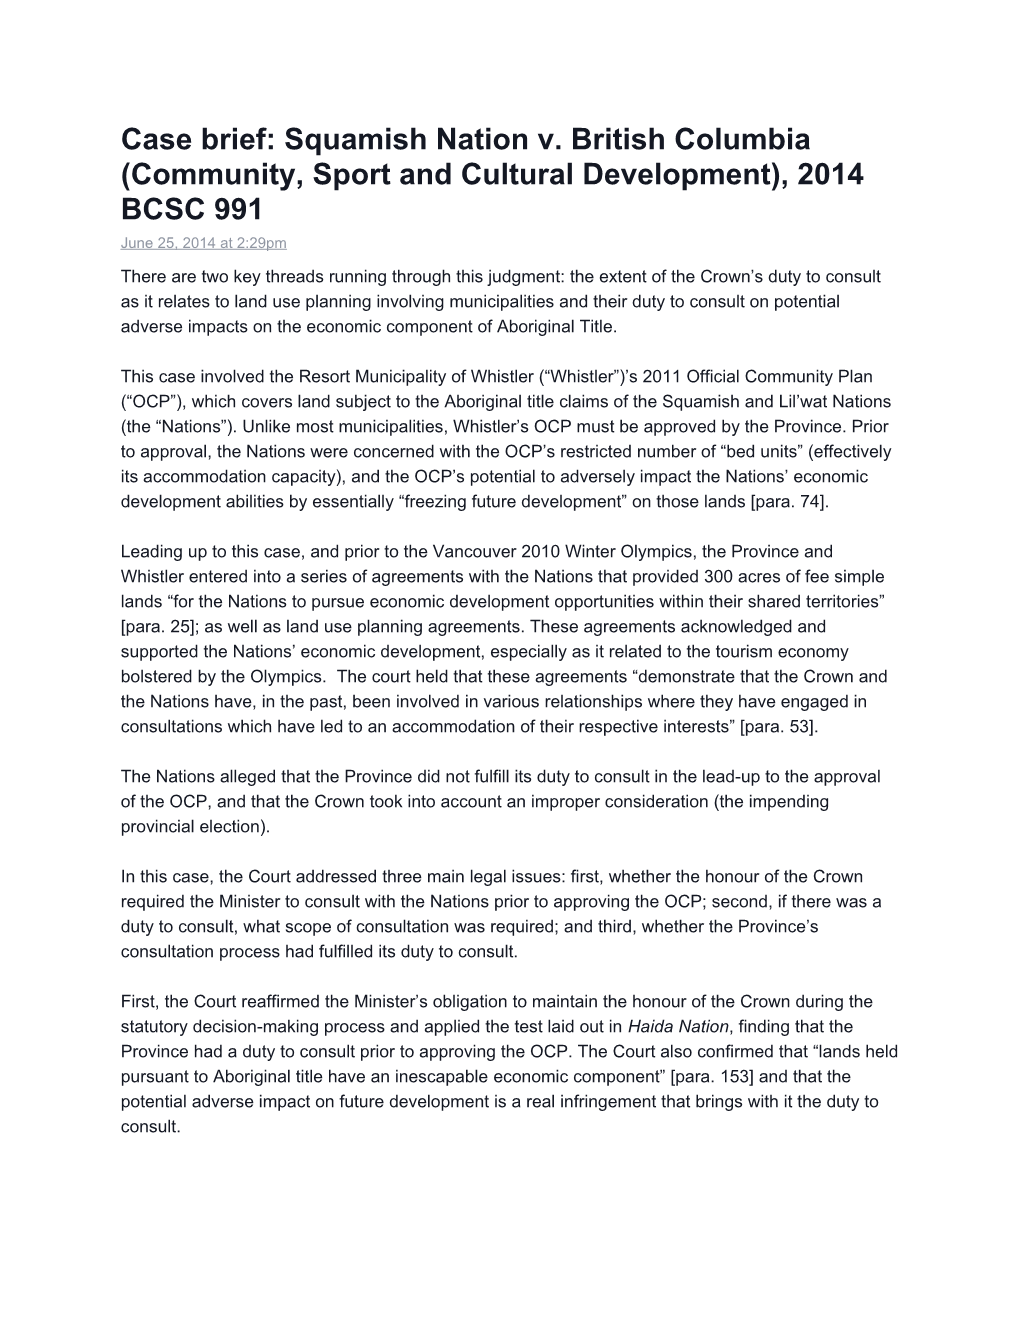 Case Brief: Squamish Nation V. British Columbia (Community, Sport and Cultural Development)